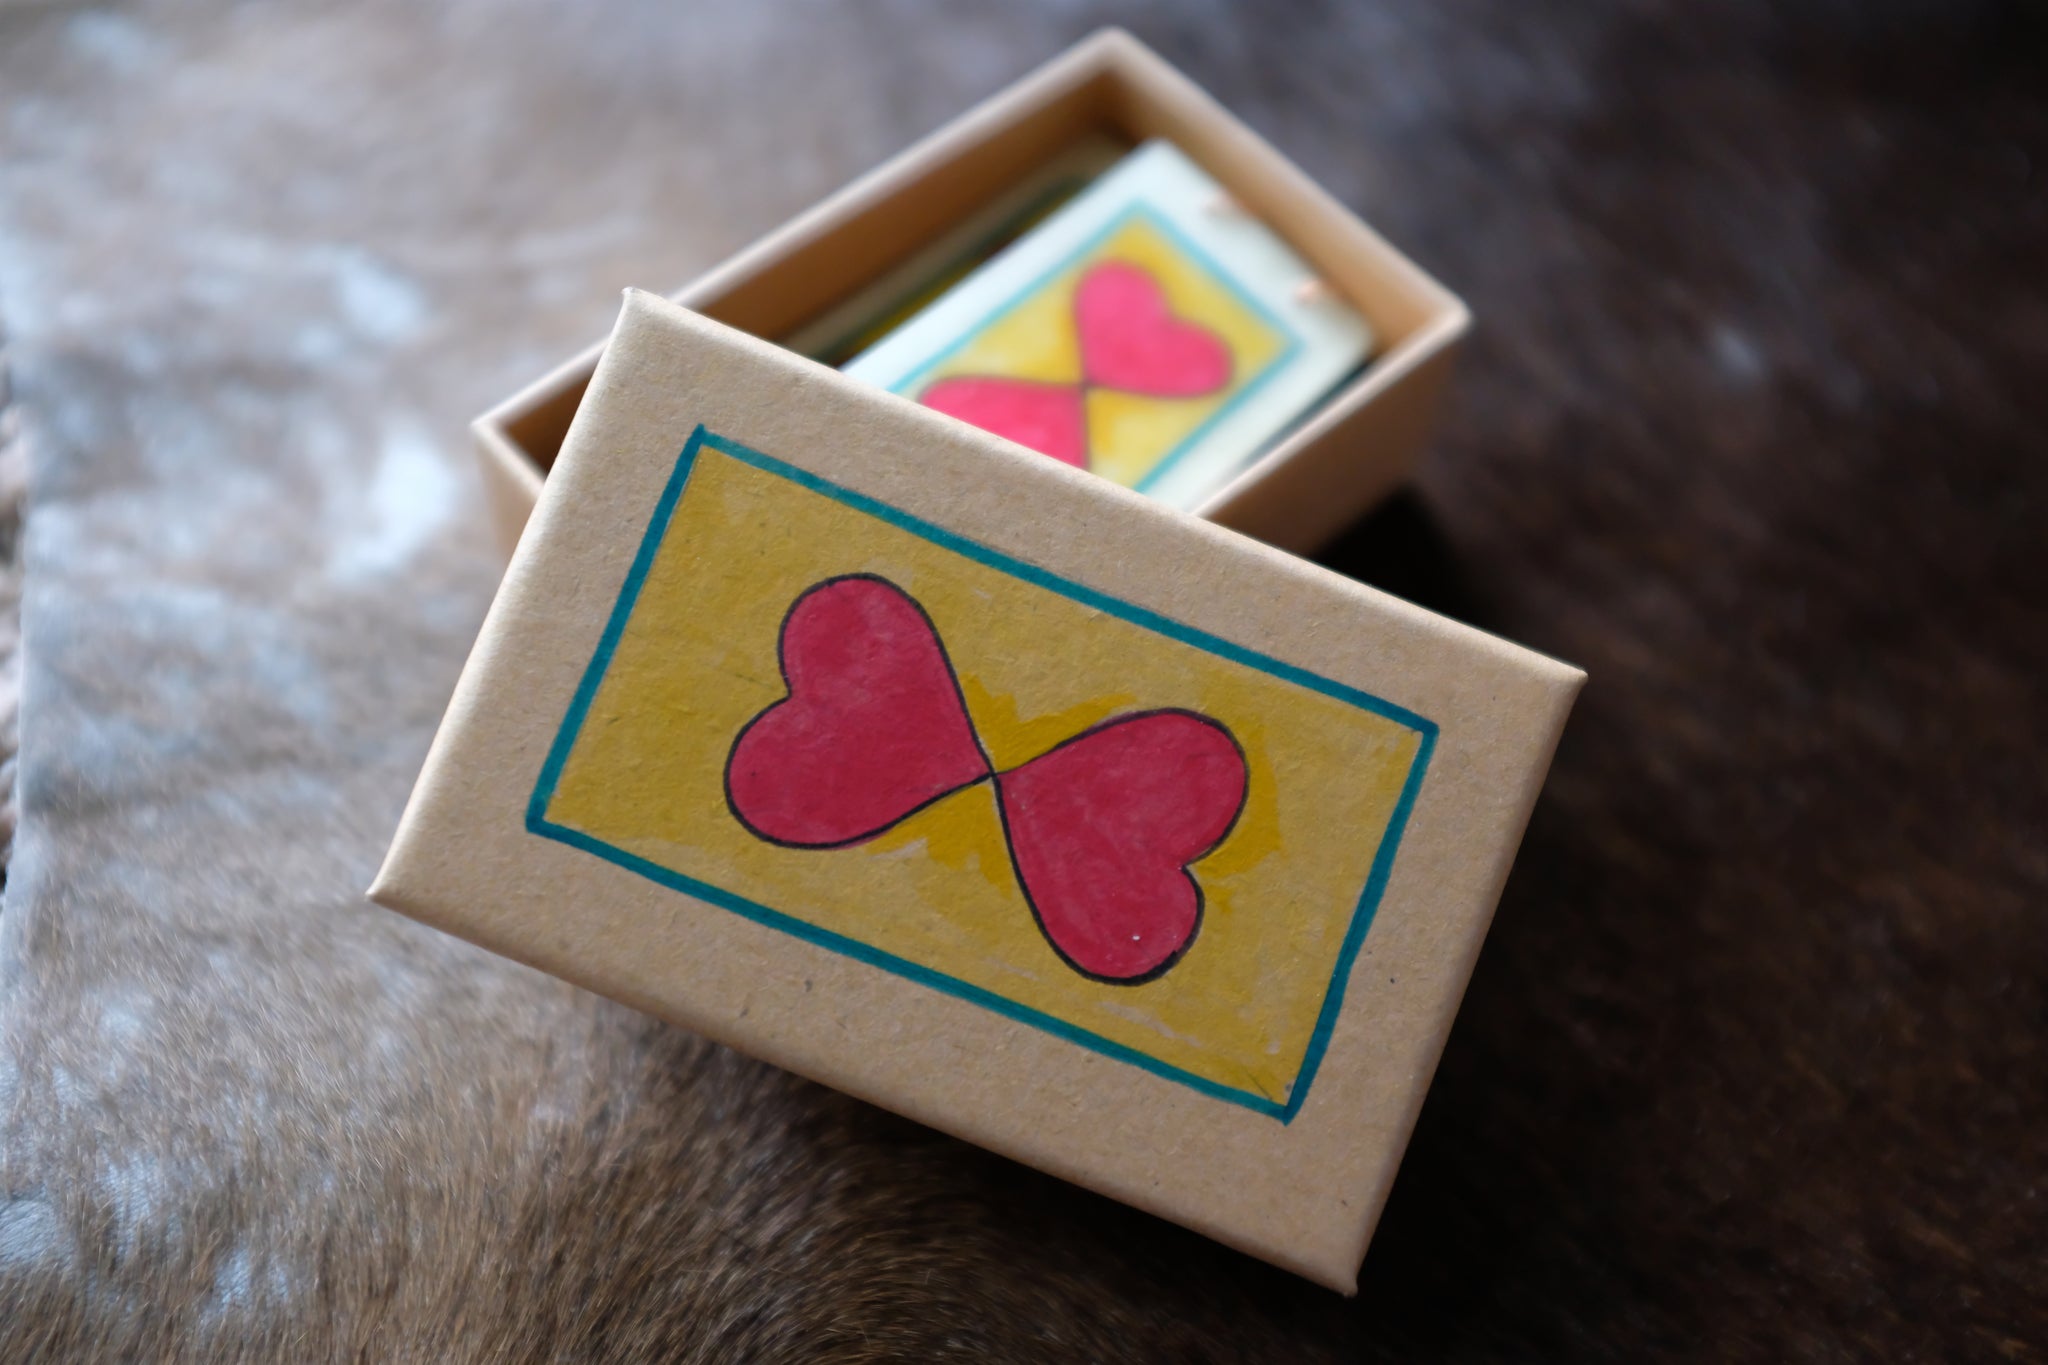 Heart Design Painted Parfleche Earrings Box Set